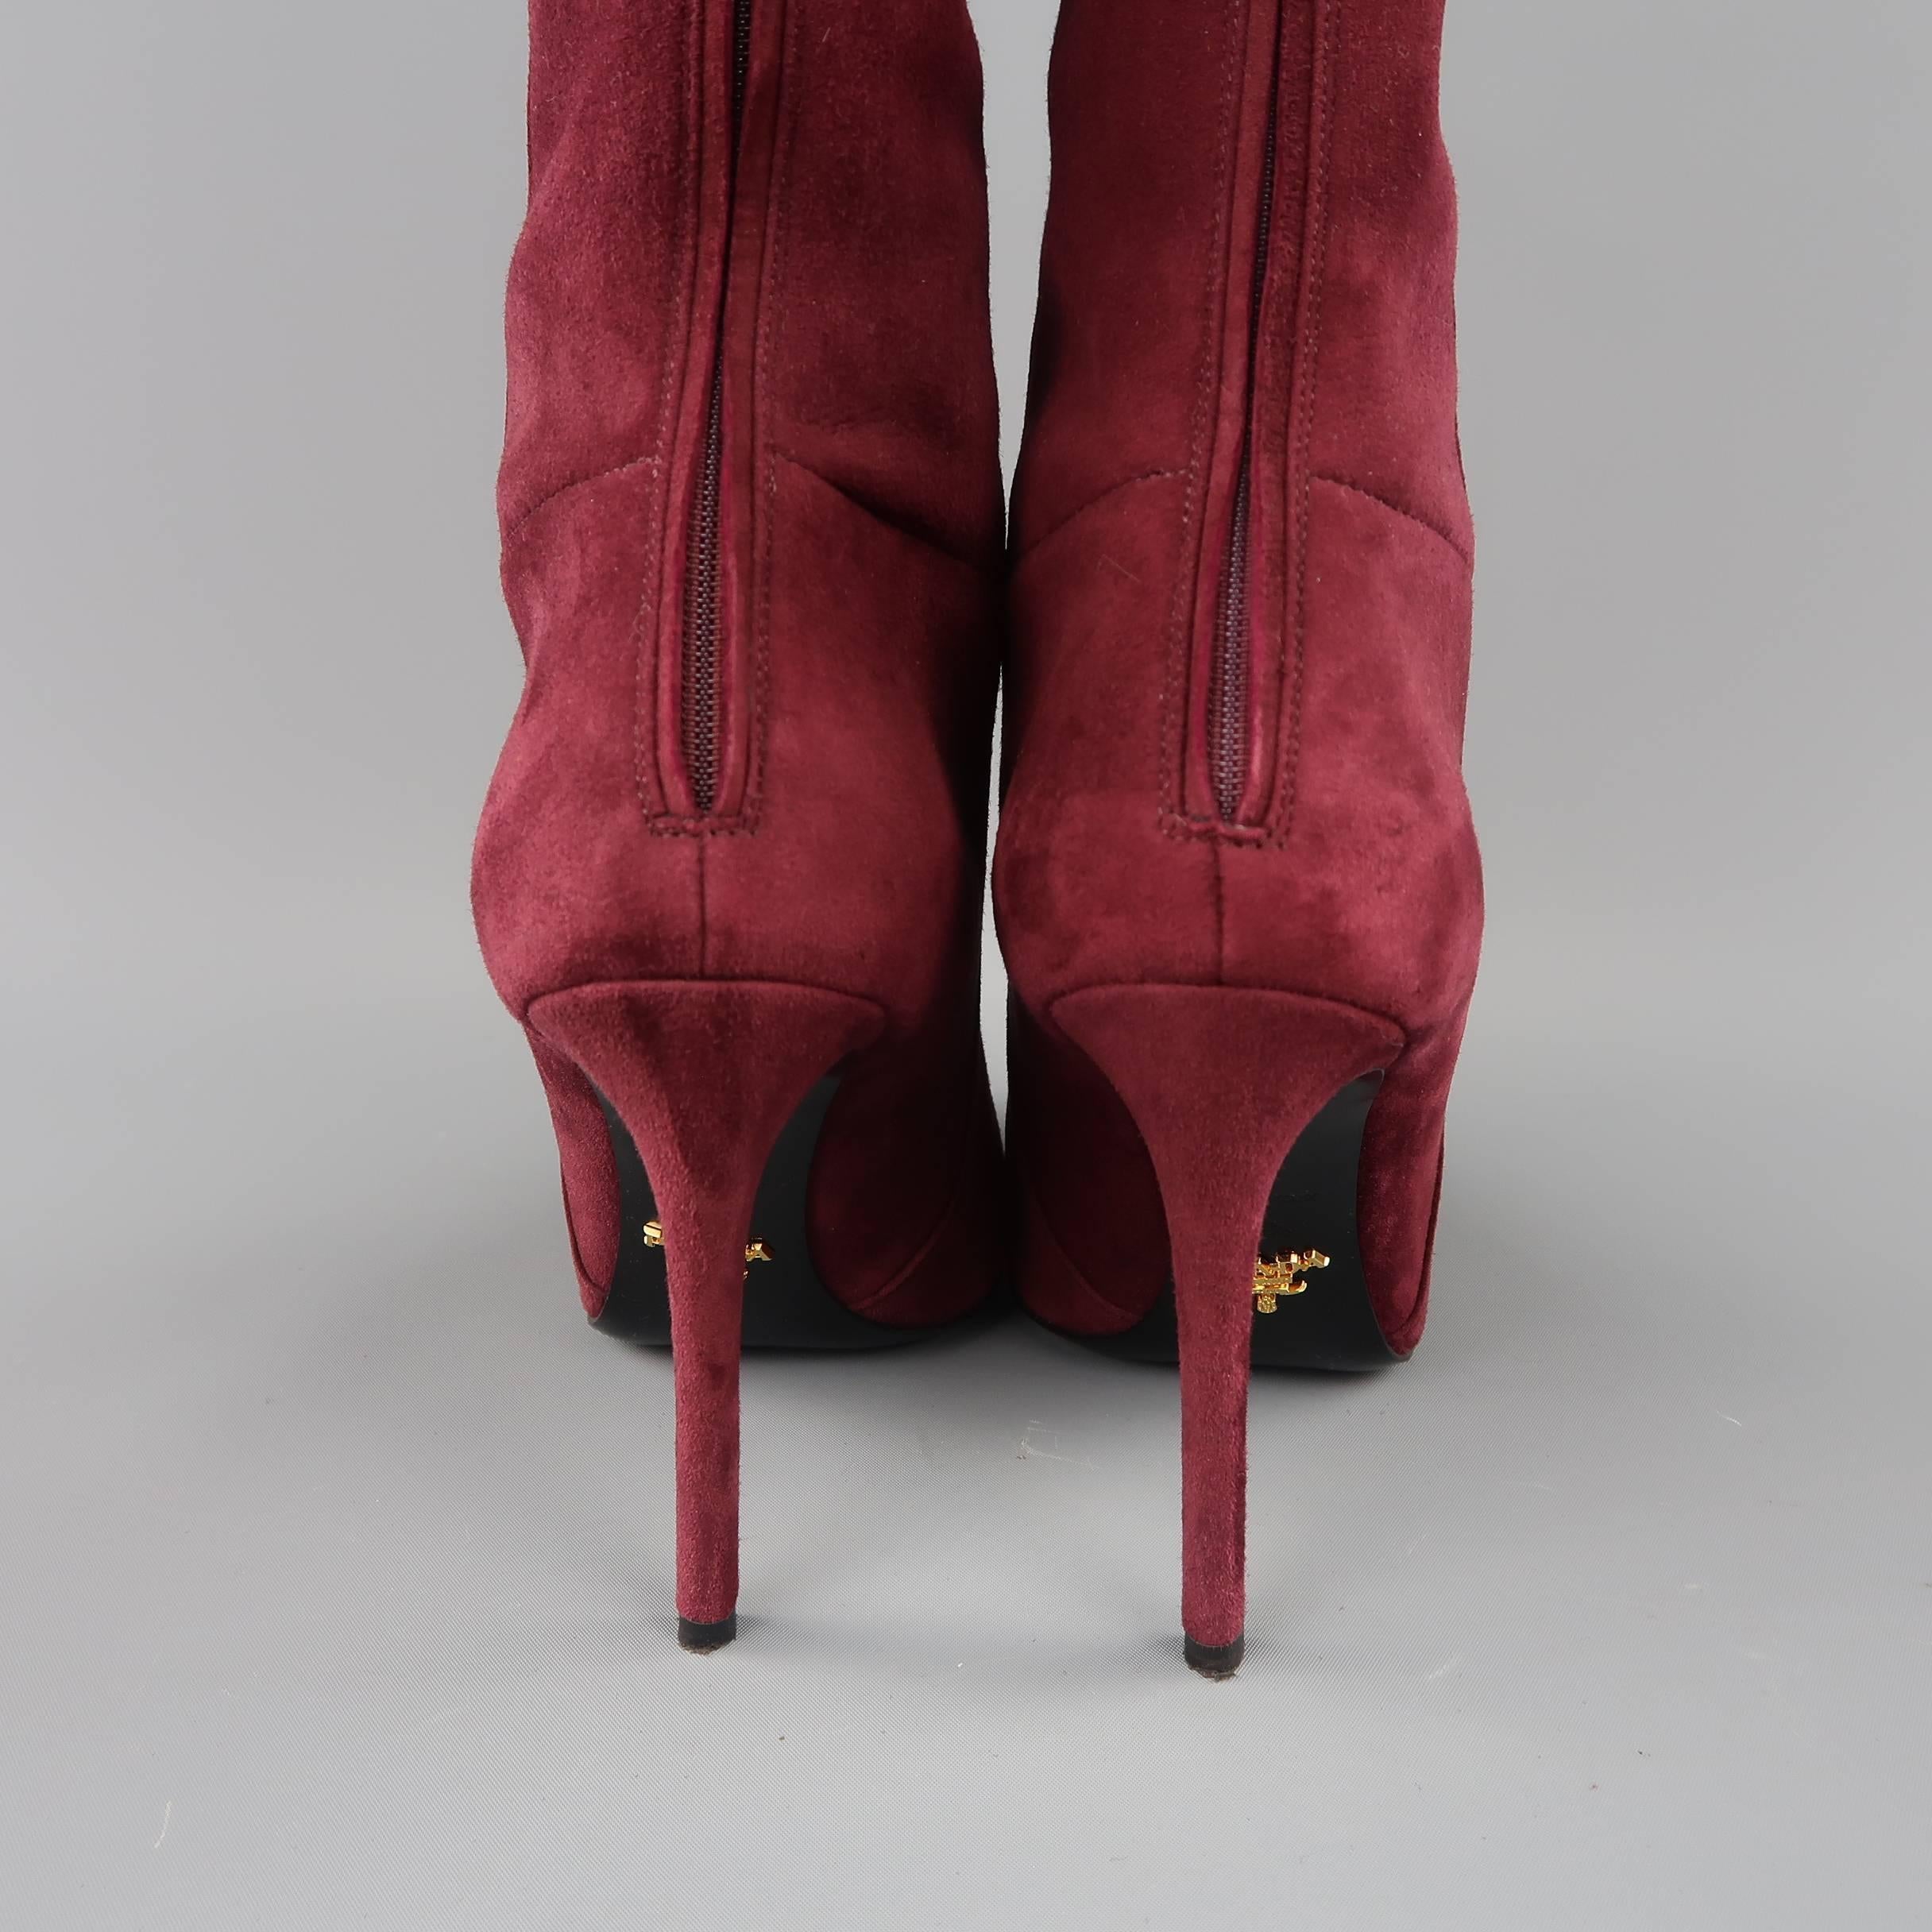 PRADA Size 8.5 Burgundy Suede Pointed Knee High Stiletto Boots 3